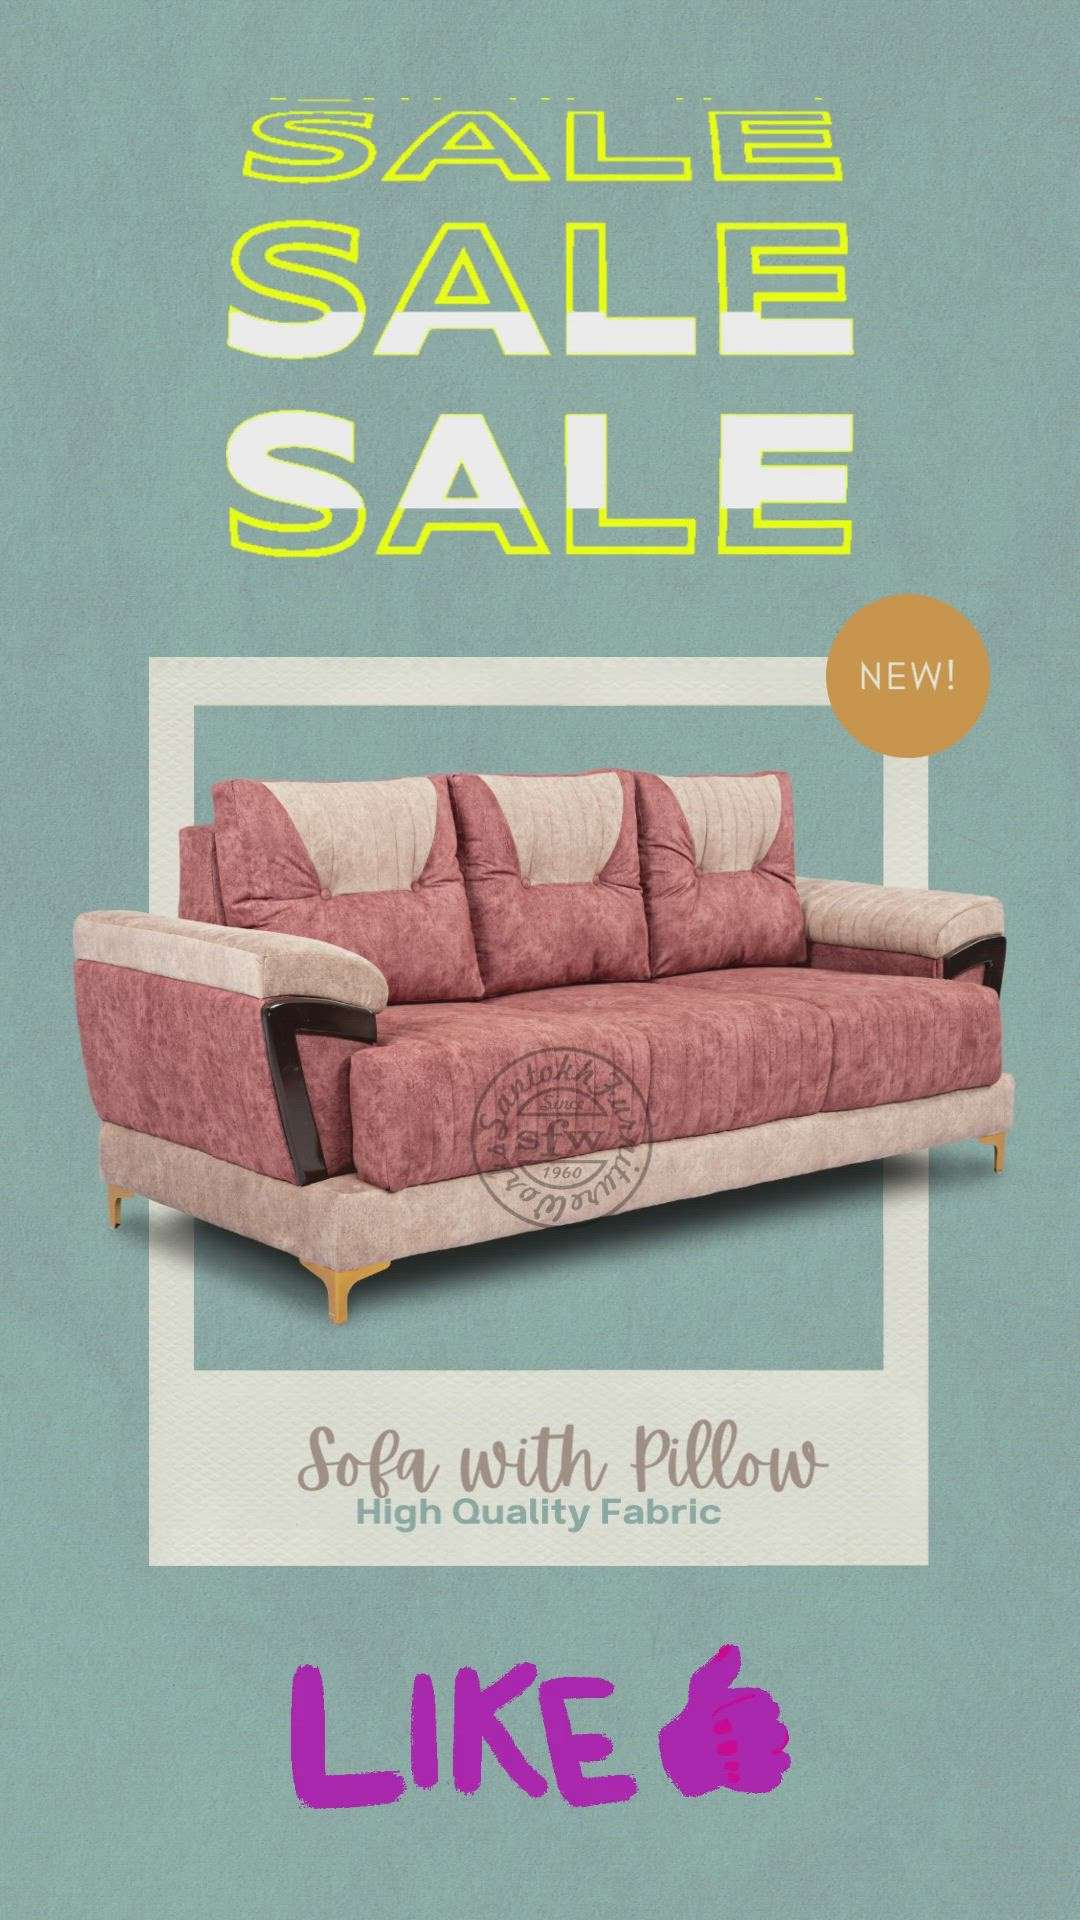 The sofa which woos friends and families. #family
Get your sofa customized from Us. #customized
DM for Enquiries.
.
.
.
.
.
.
.
.
.
#sofa #furniture #interiordesign #homedecor #interior #design #sofaminimalis #livingroom #home #decor #furnituredesign  #sofabed  #soft #furniturejepara #sfw #Upholstery #furnishers #kursi #sofaretro #mebeljepara #decoration #sofaset #couch #interiors #homedesign #sofadesign #kursi